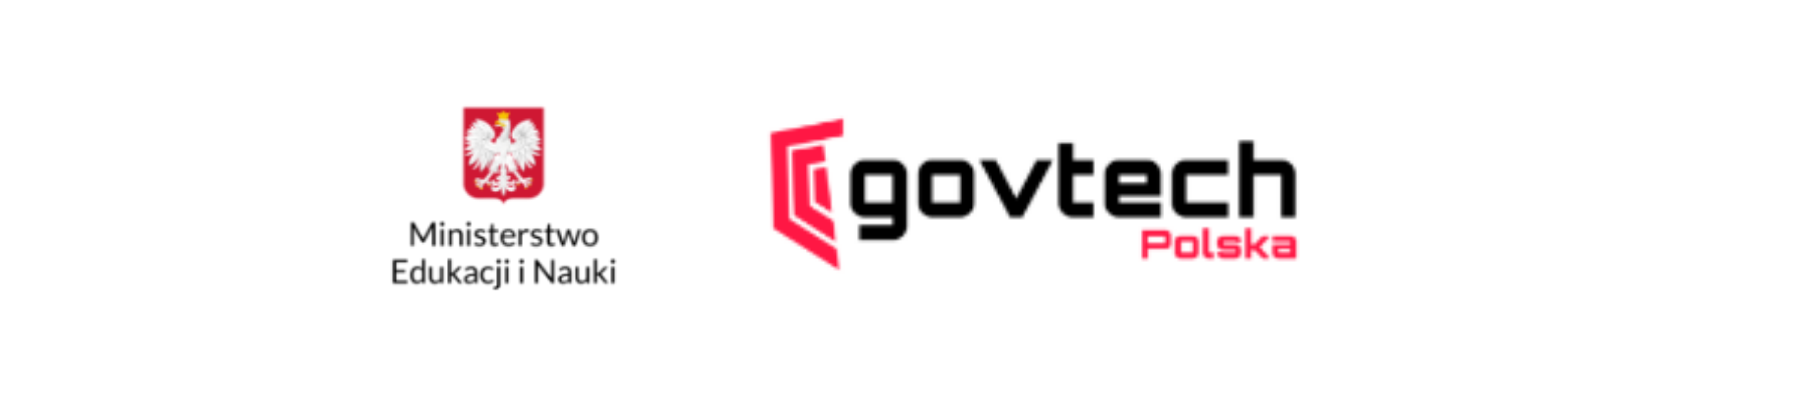 logotypy projektu: Ministerstwo Edukacji i Nauki, govtech Polska